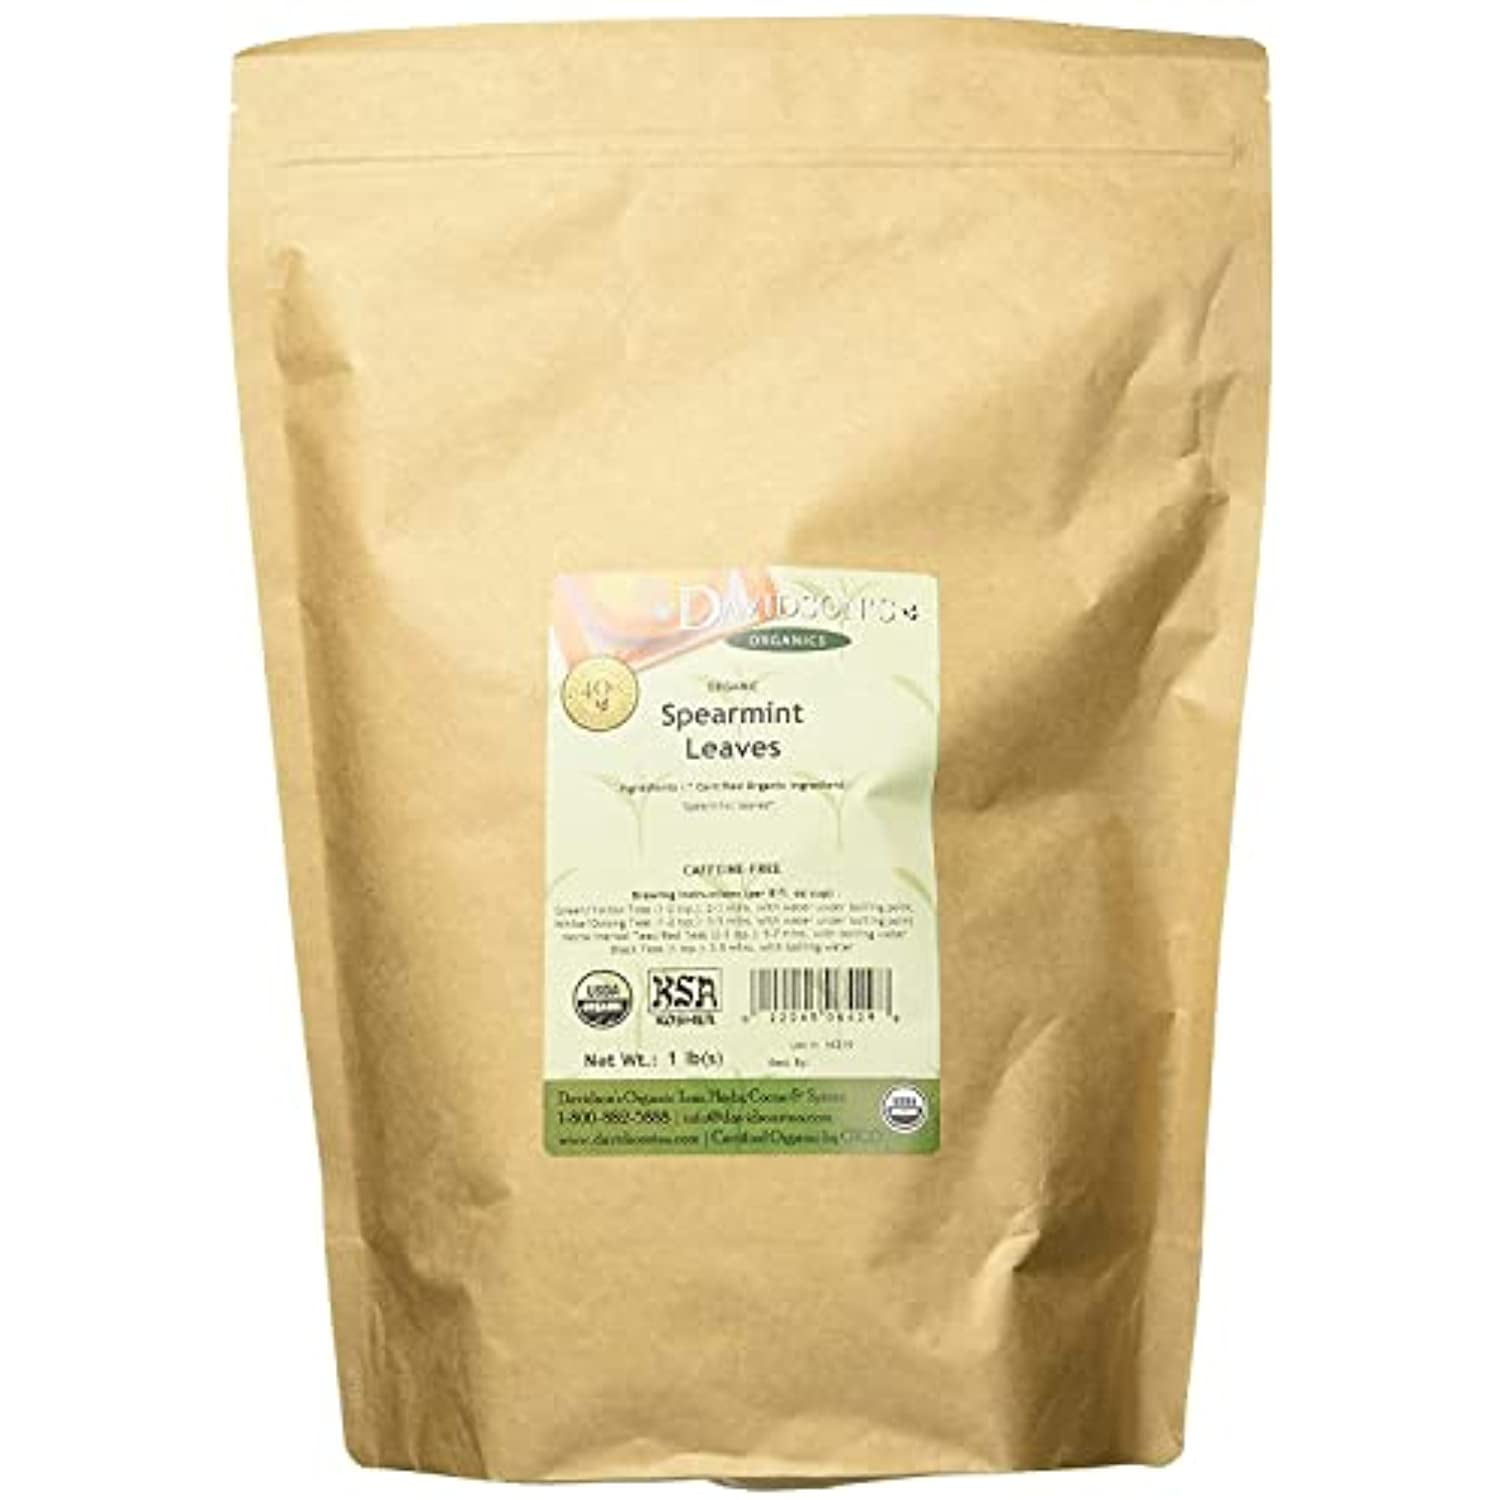 Organic Spearmint Tea, 16 tea bag at Whole Foods Market